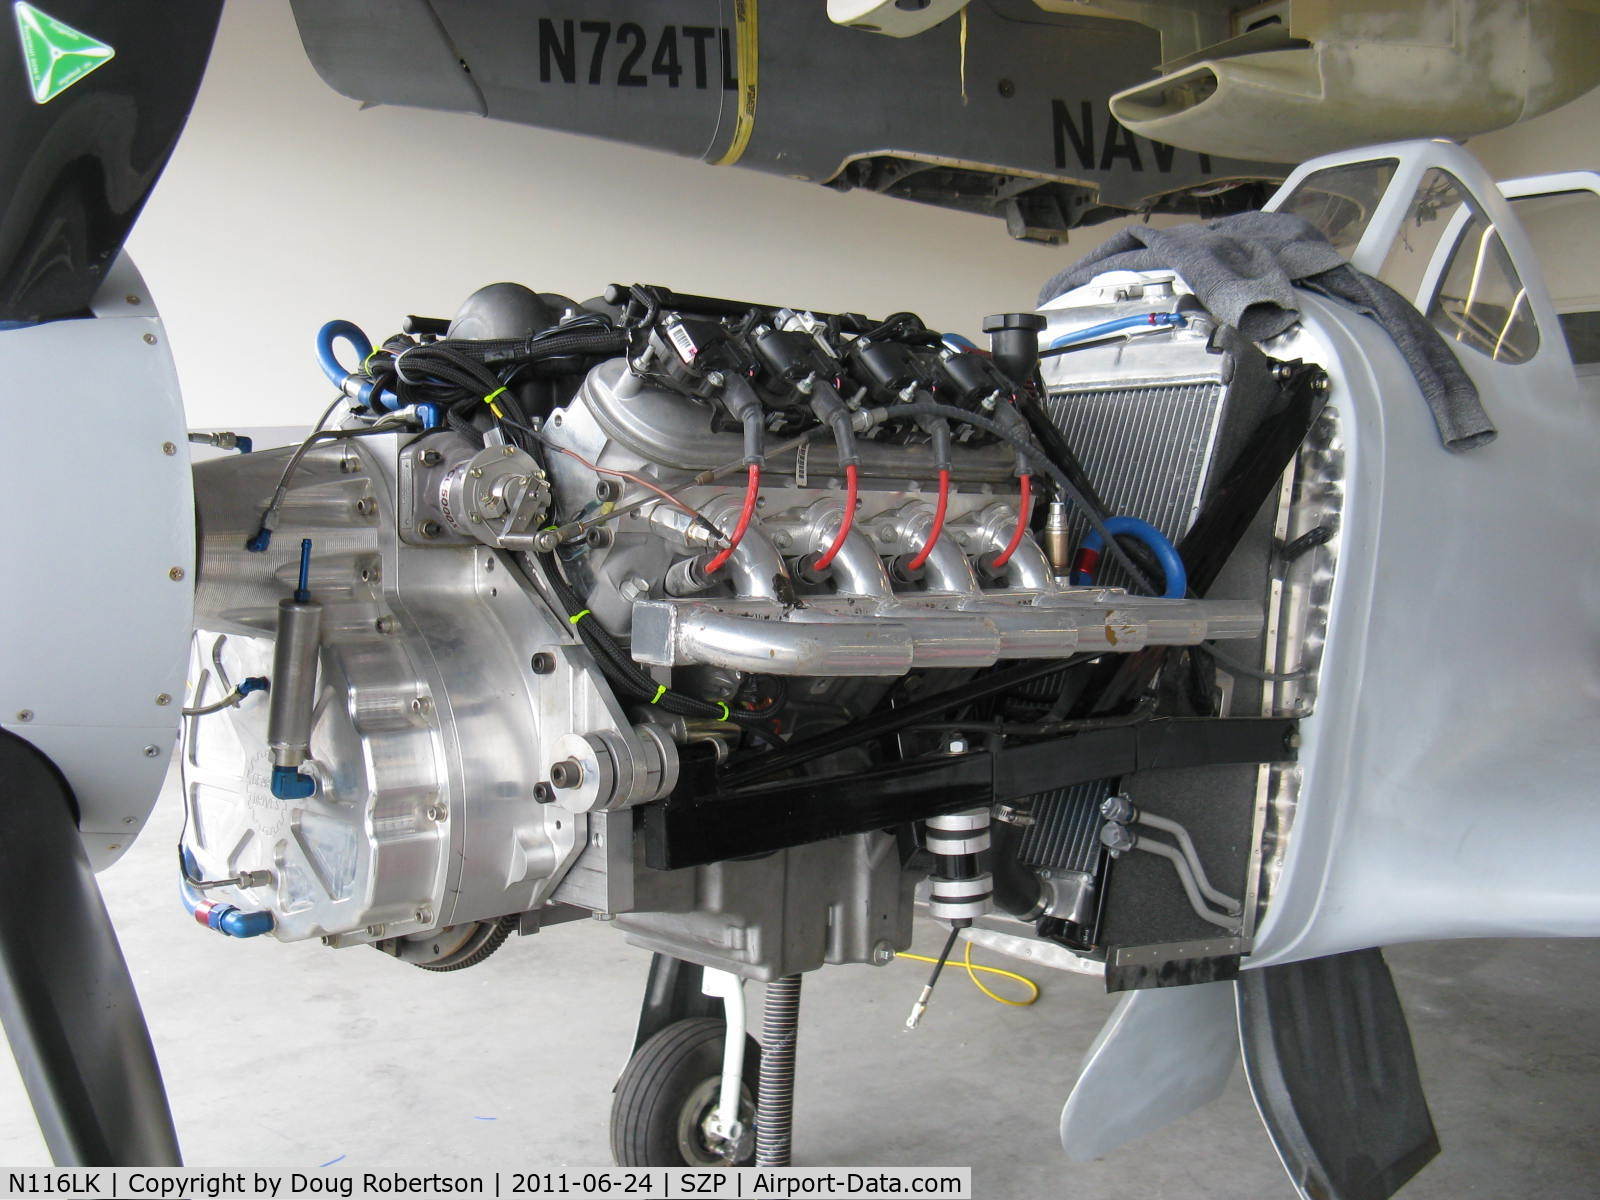 N116LK, North American P-51 Mustang 70% Replica C/N 12, 2011 Ketterling Fighter Escort Wings, Ltd. P-51D MUSTANG, 70% scale, Corvette LS-1 V-8 engine 320 Hp with 1.6/1 Geared Drive PSRU, in build